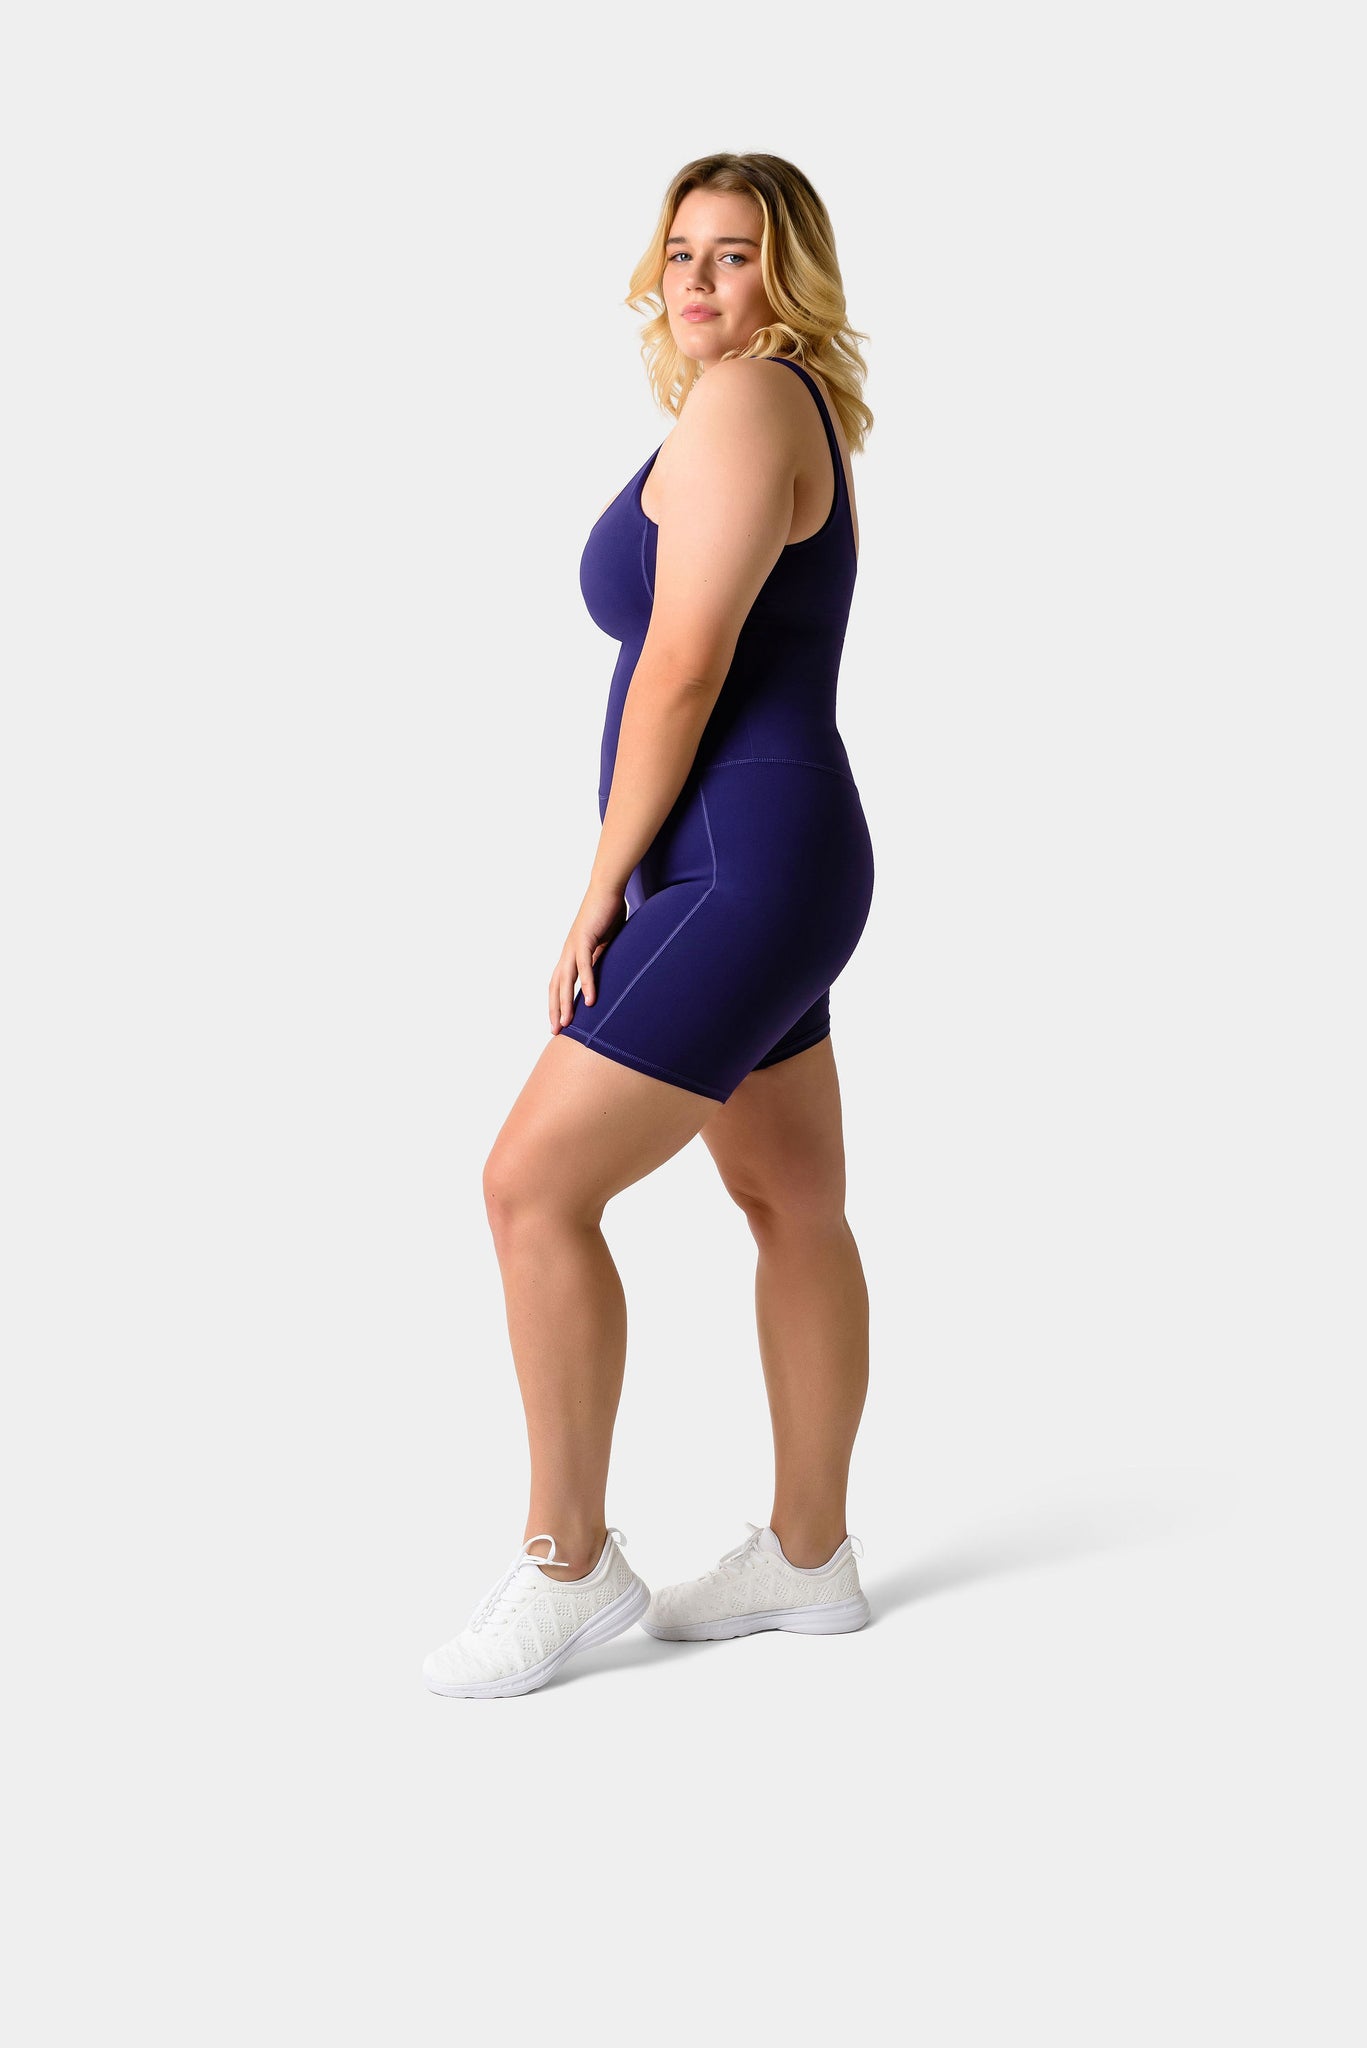 Cora Athletic Bodysuit - Rhodonite